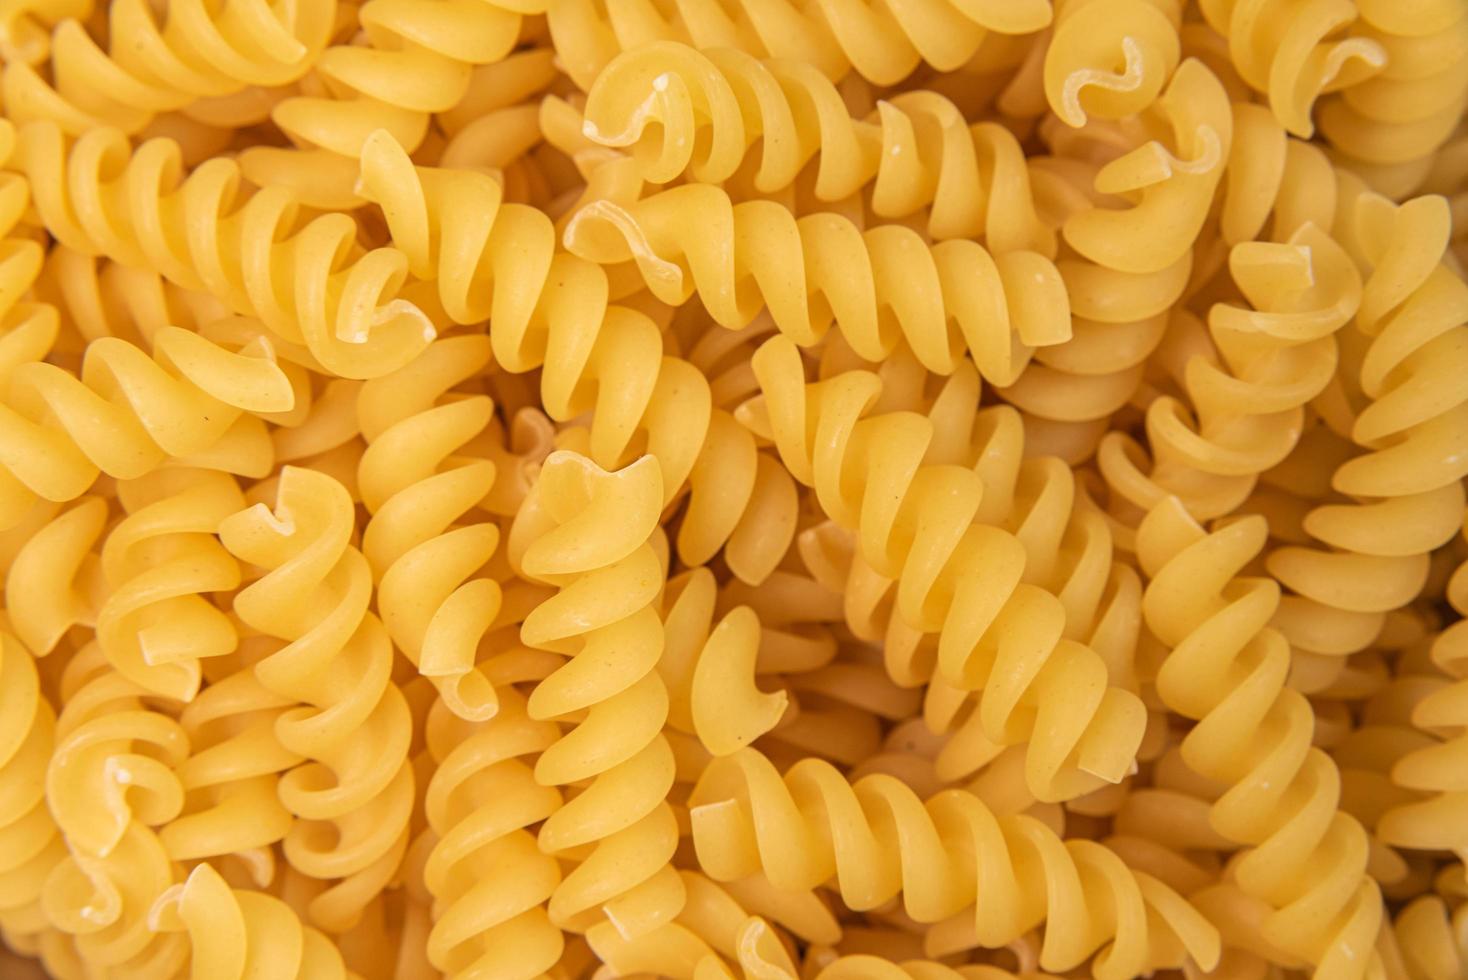 Raw pasta - macro detail - closeup photo